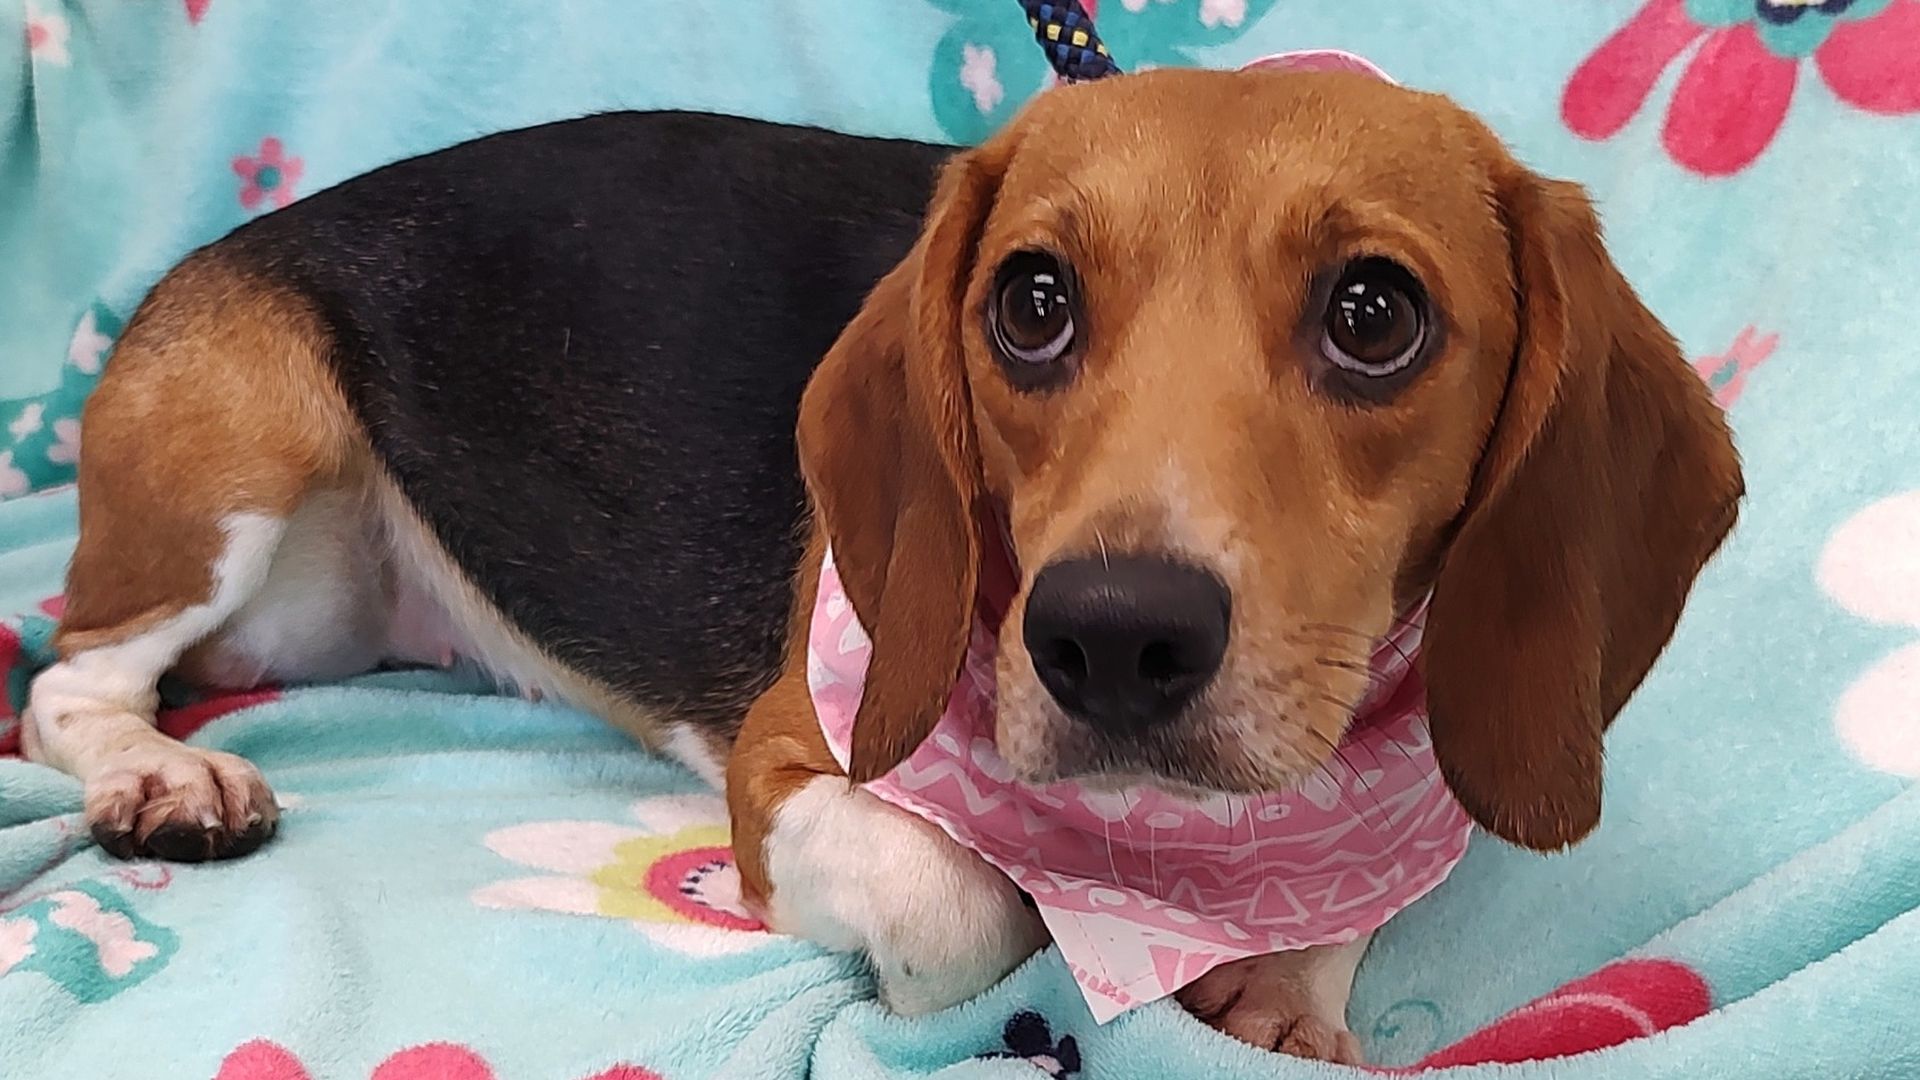 A beagle on a flower-print blanket